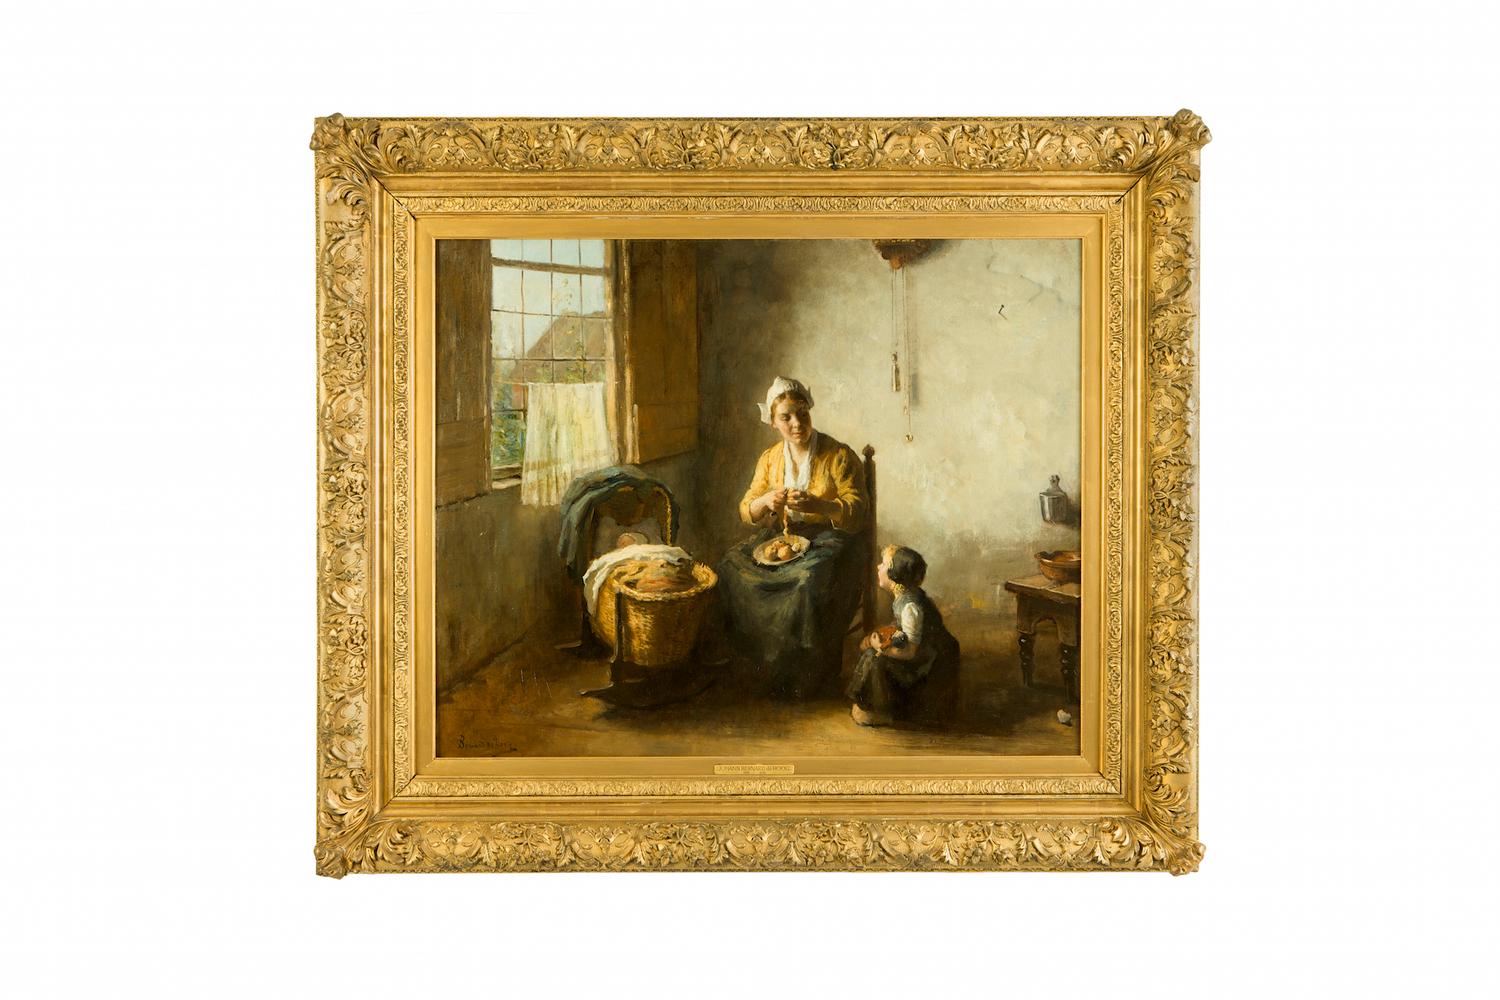 Bernard de Hoog (1866-1943)

Domesticity

Oil on canvas, original frame, 77.5 x 98cm / 114 x 134cm 

Bernard de Hoog, a Dutch artist, began his career following a commission to undertake a portrait of his merchant employer's wife. De Hoog had